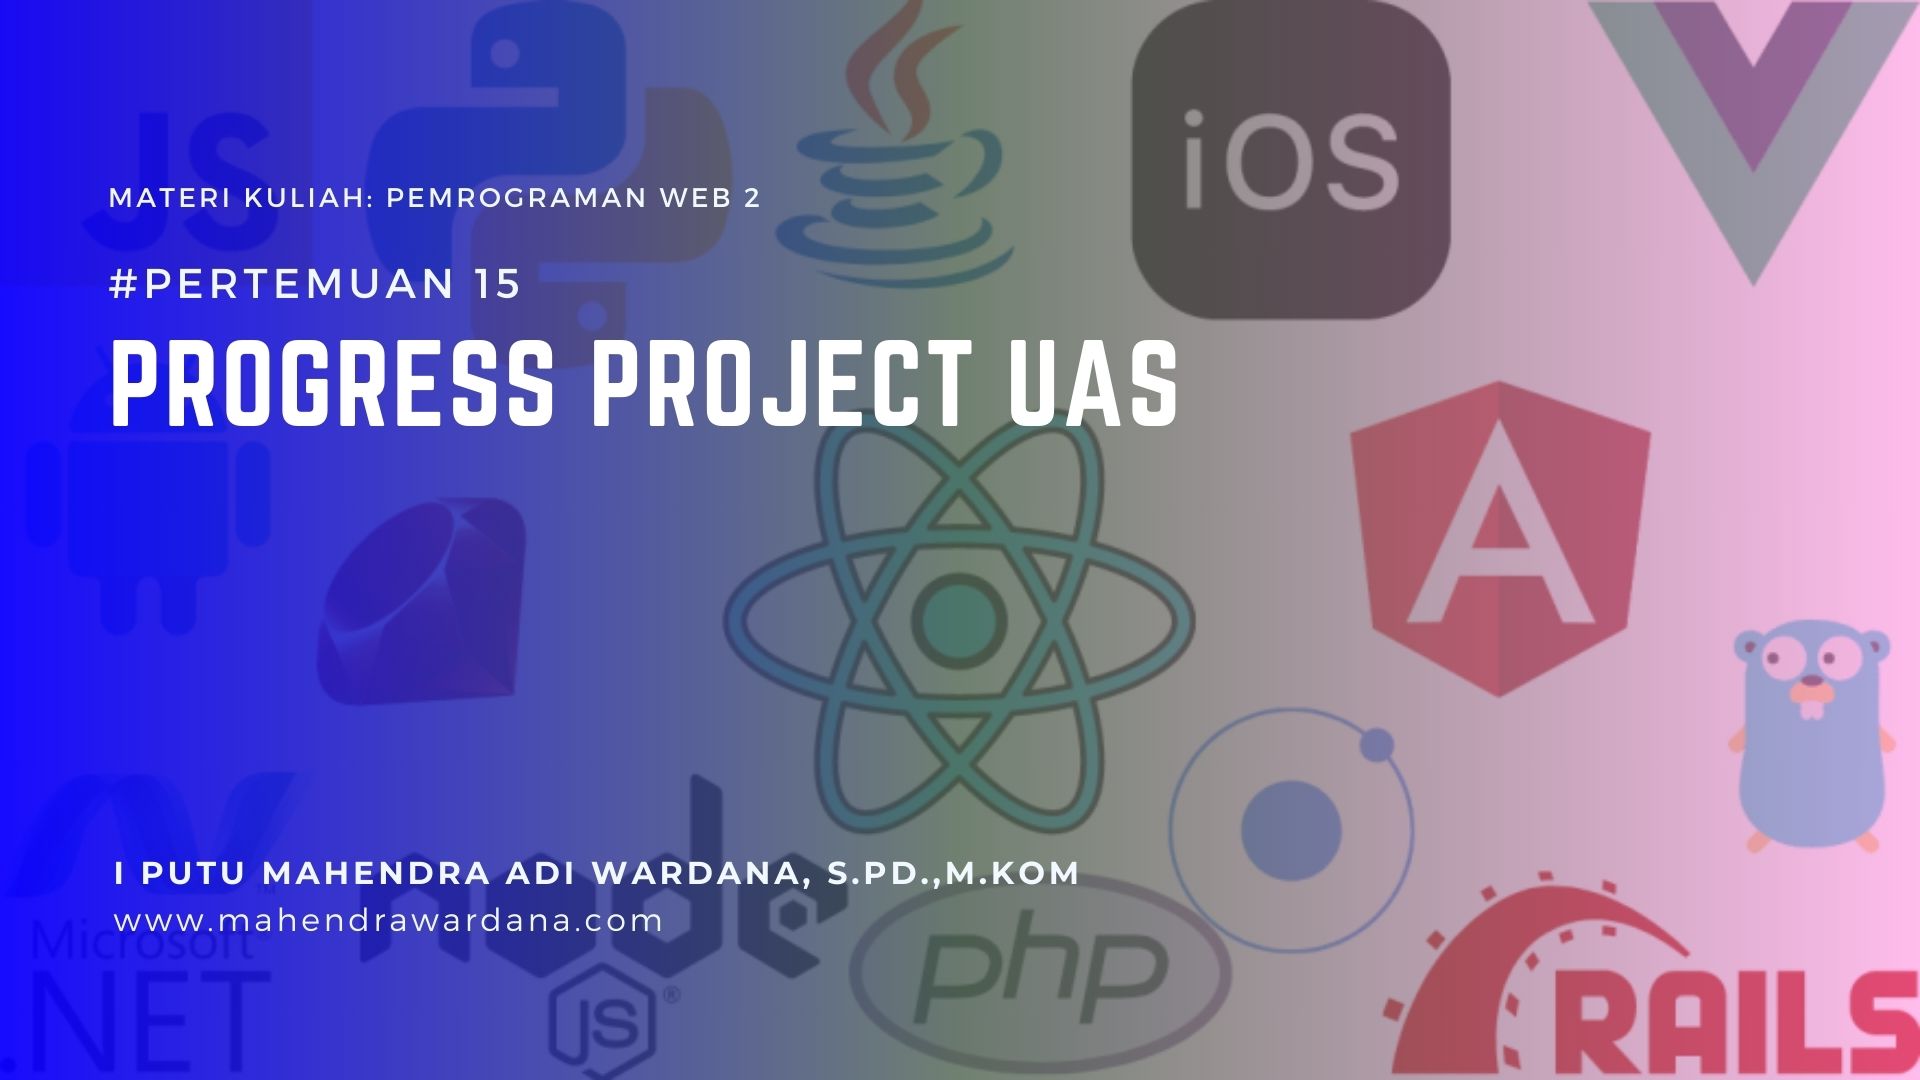 Pertemuan 15 - Progress Project UAS